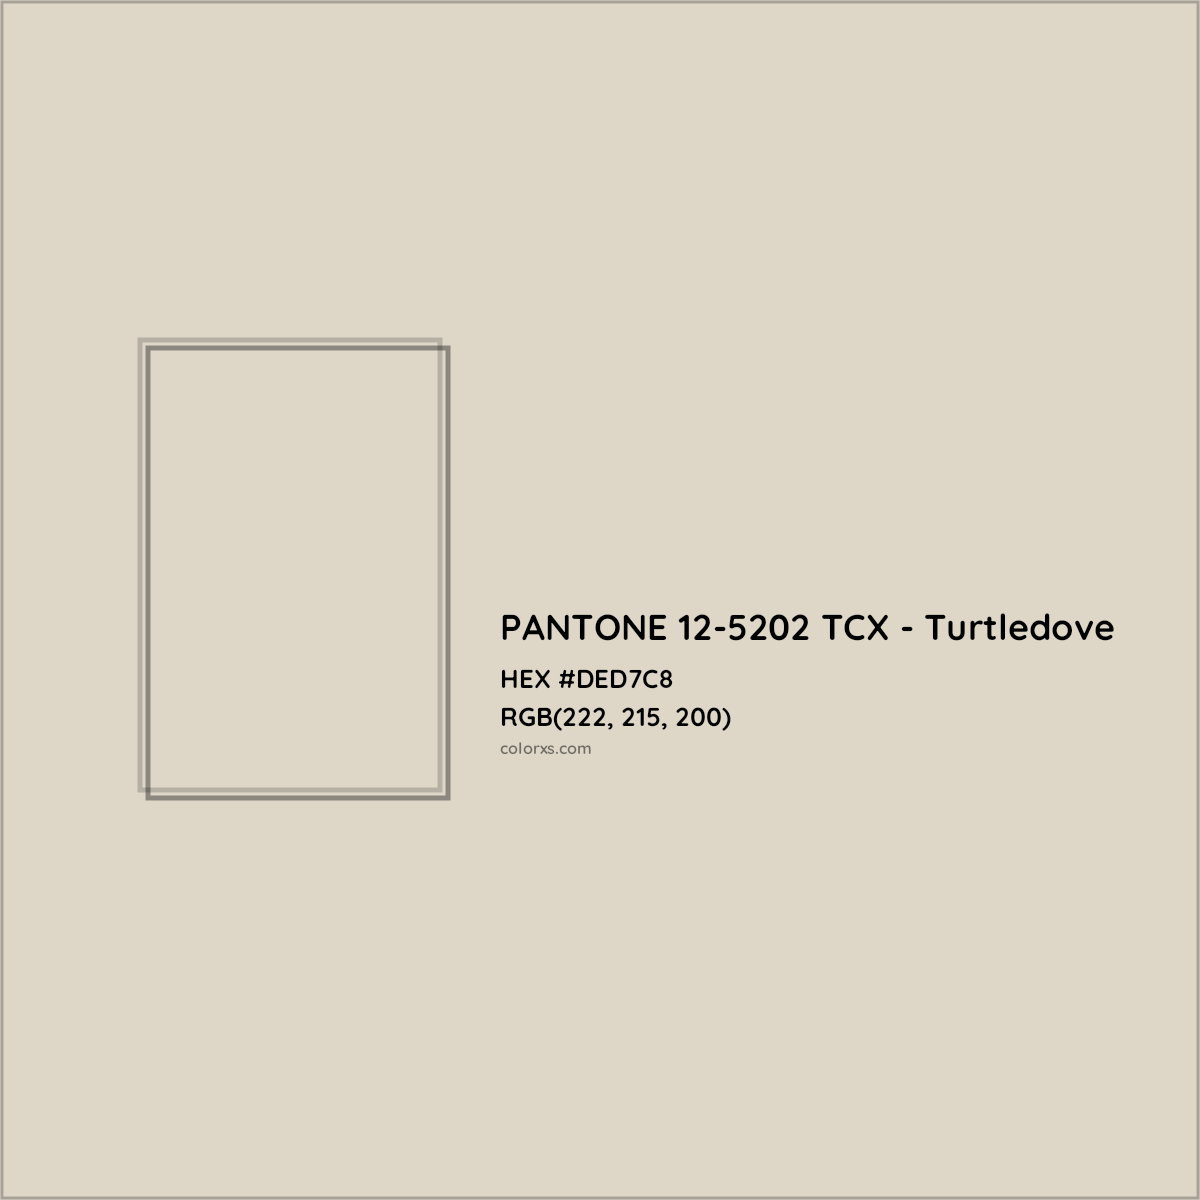 HEX #DED7C8 PANTONE 12-5202 TCX - Turtledove CMS Pantone TCX - Color Code